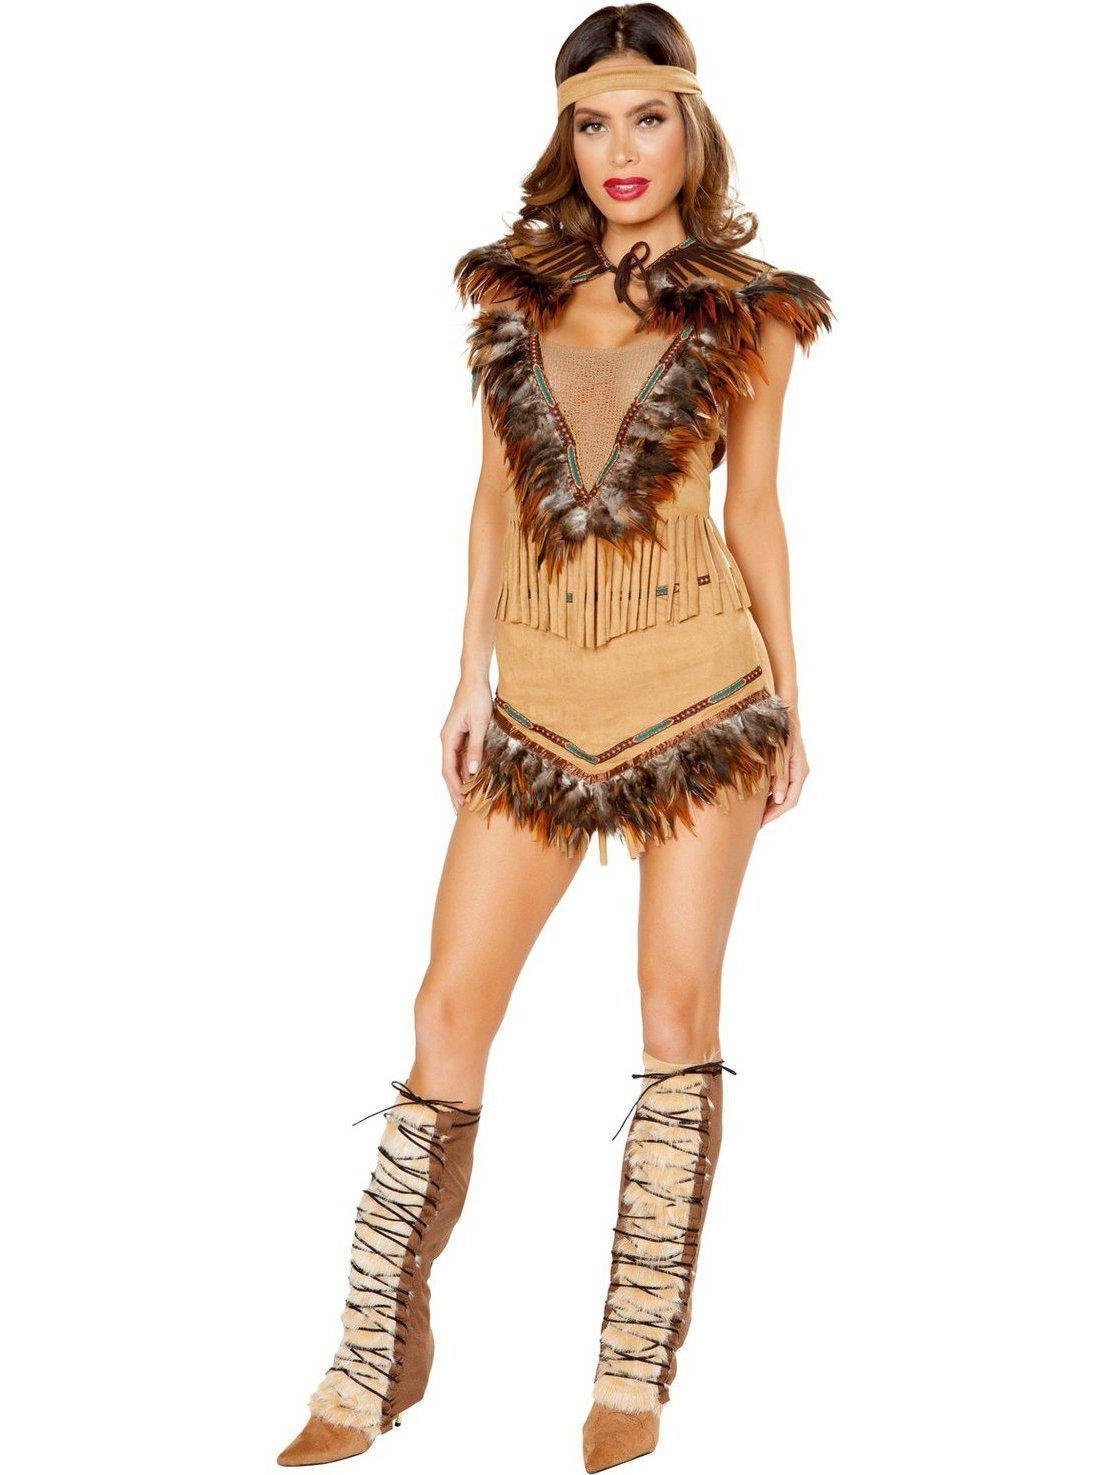 Roma RM-10117 3pc Cherokee Inspired Hottie Жаночы касцюм Roma костюм